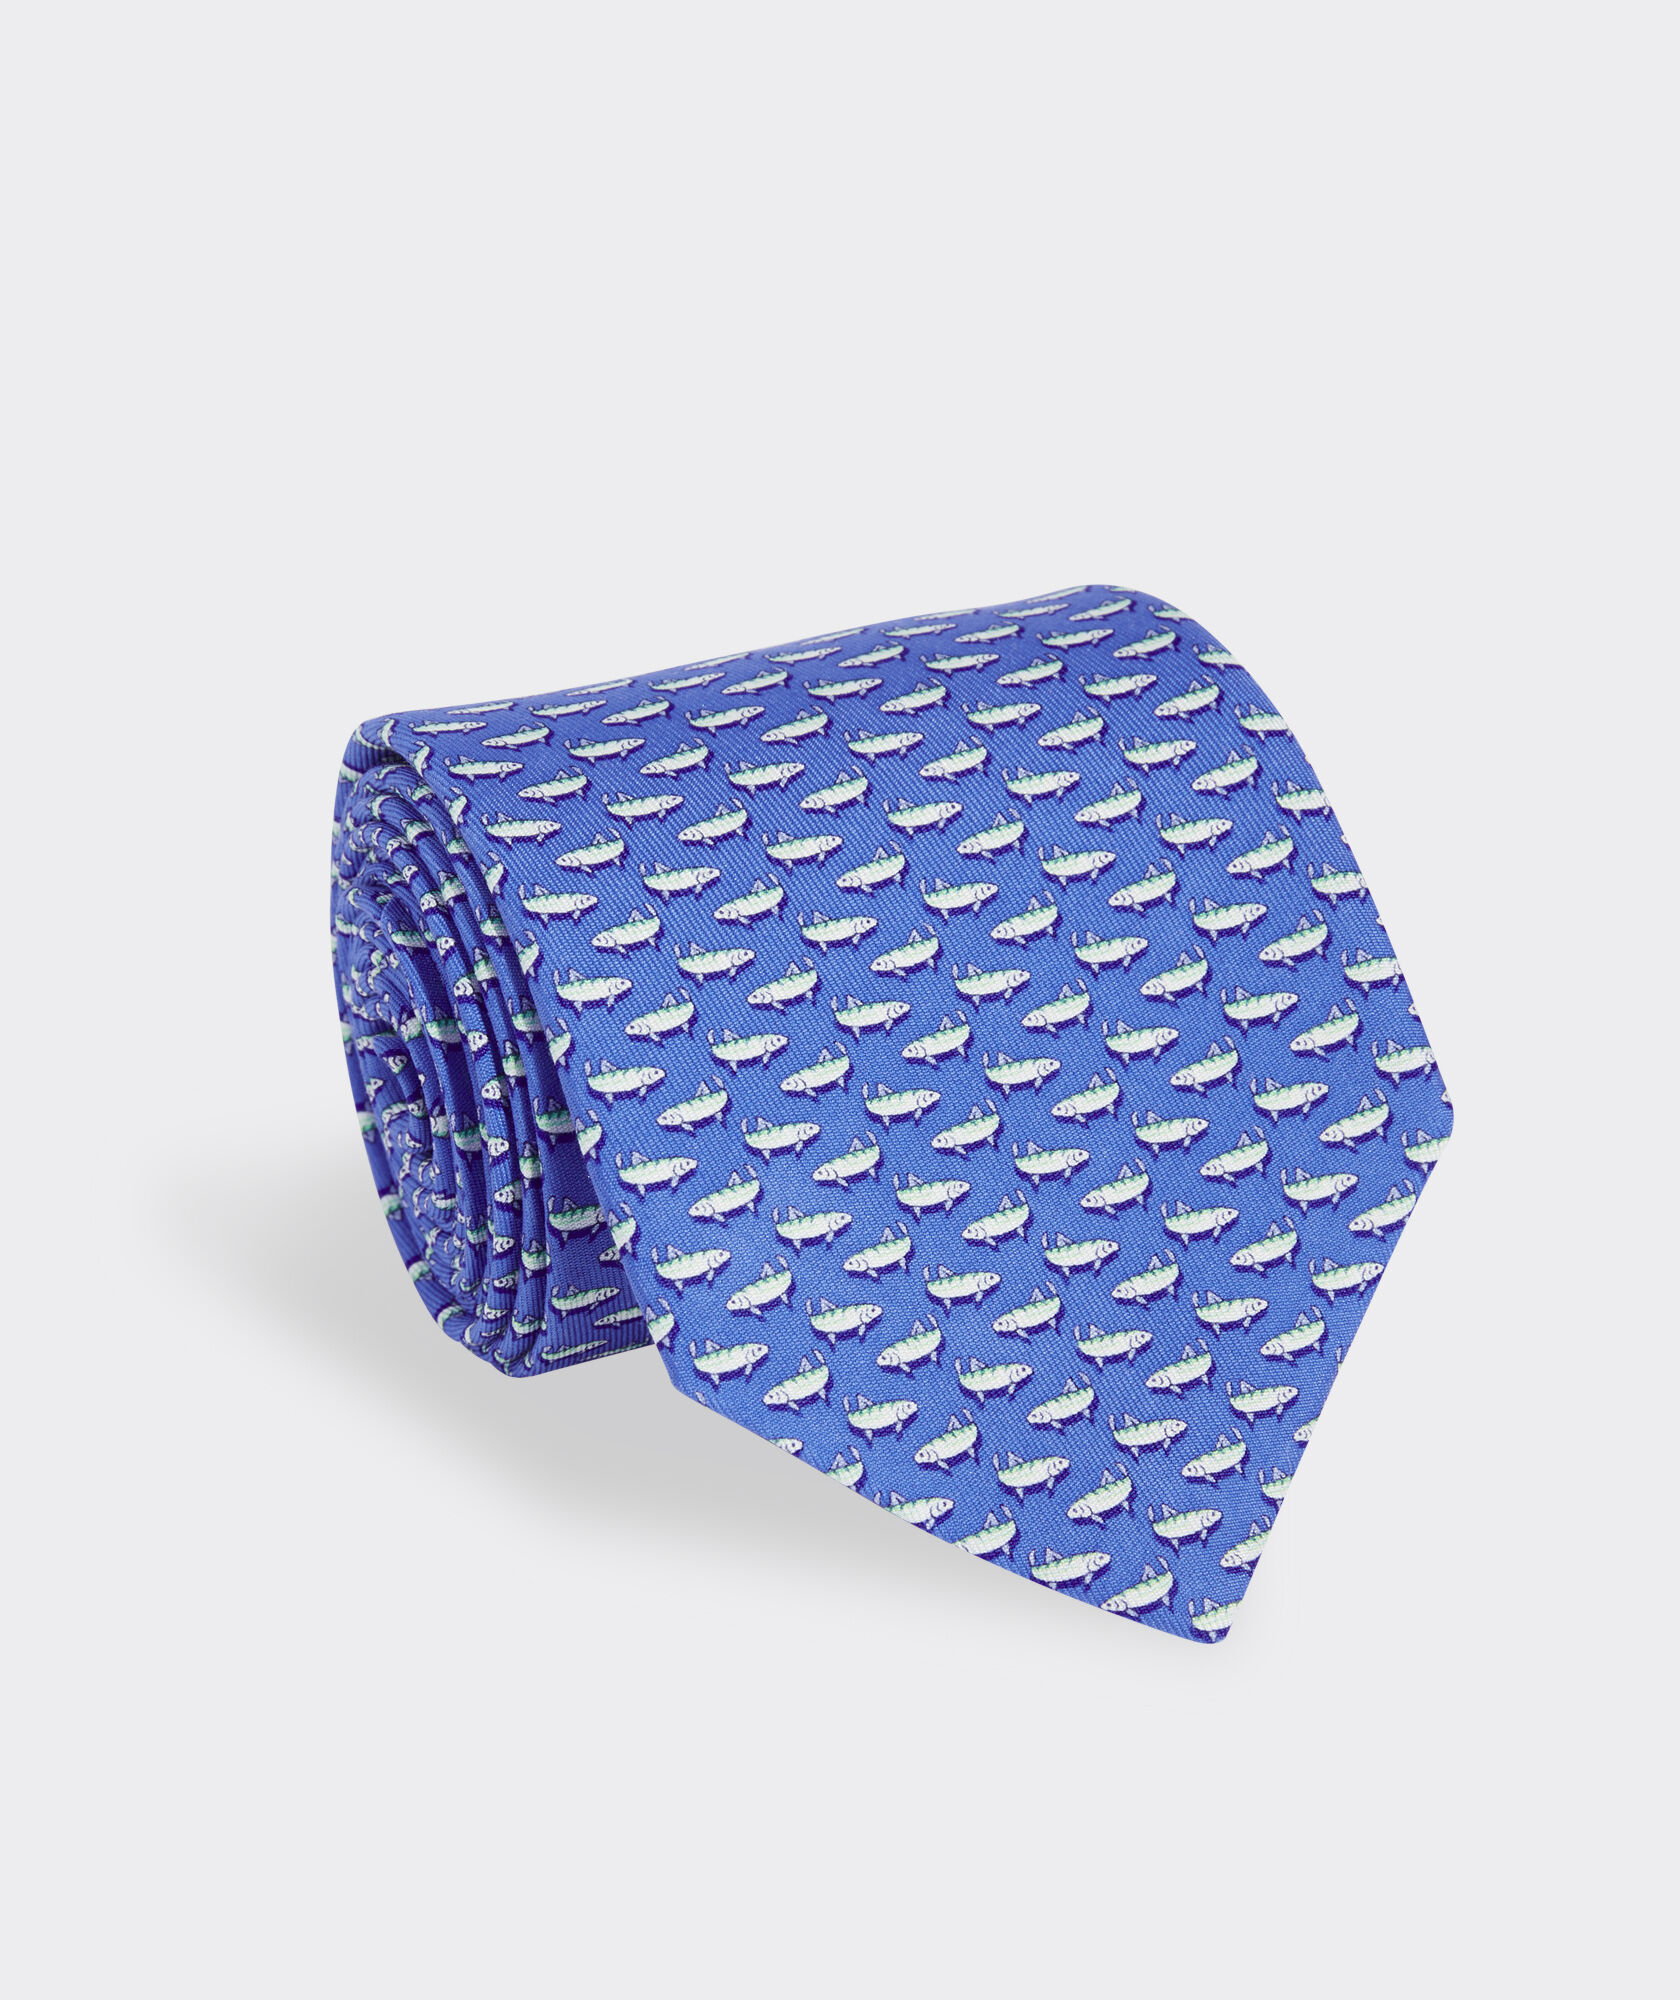 Bonefish Printed Tie